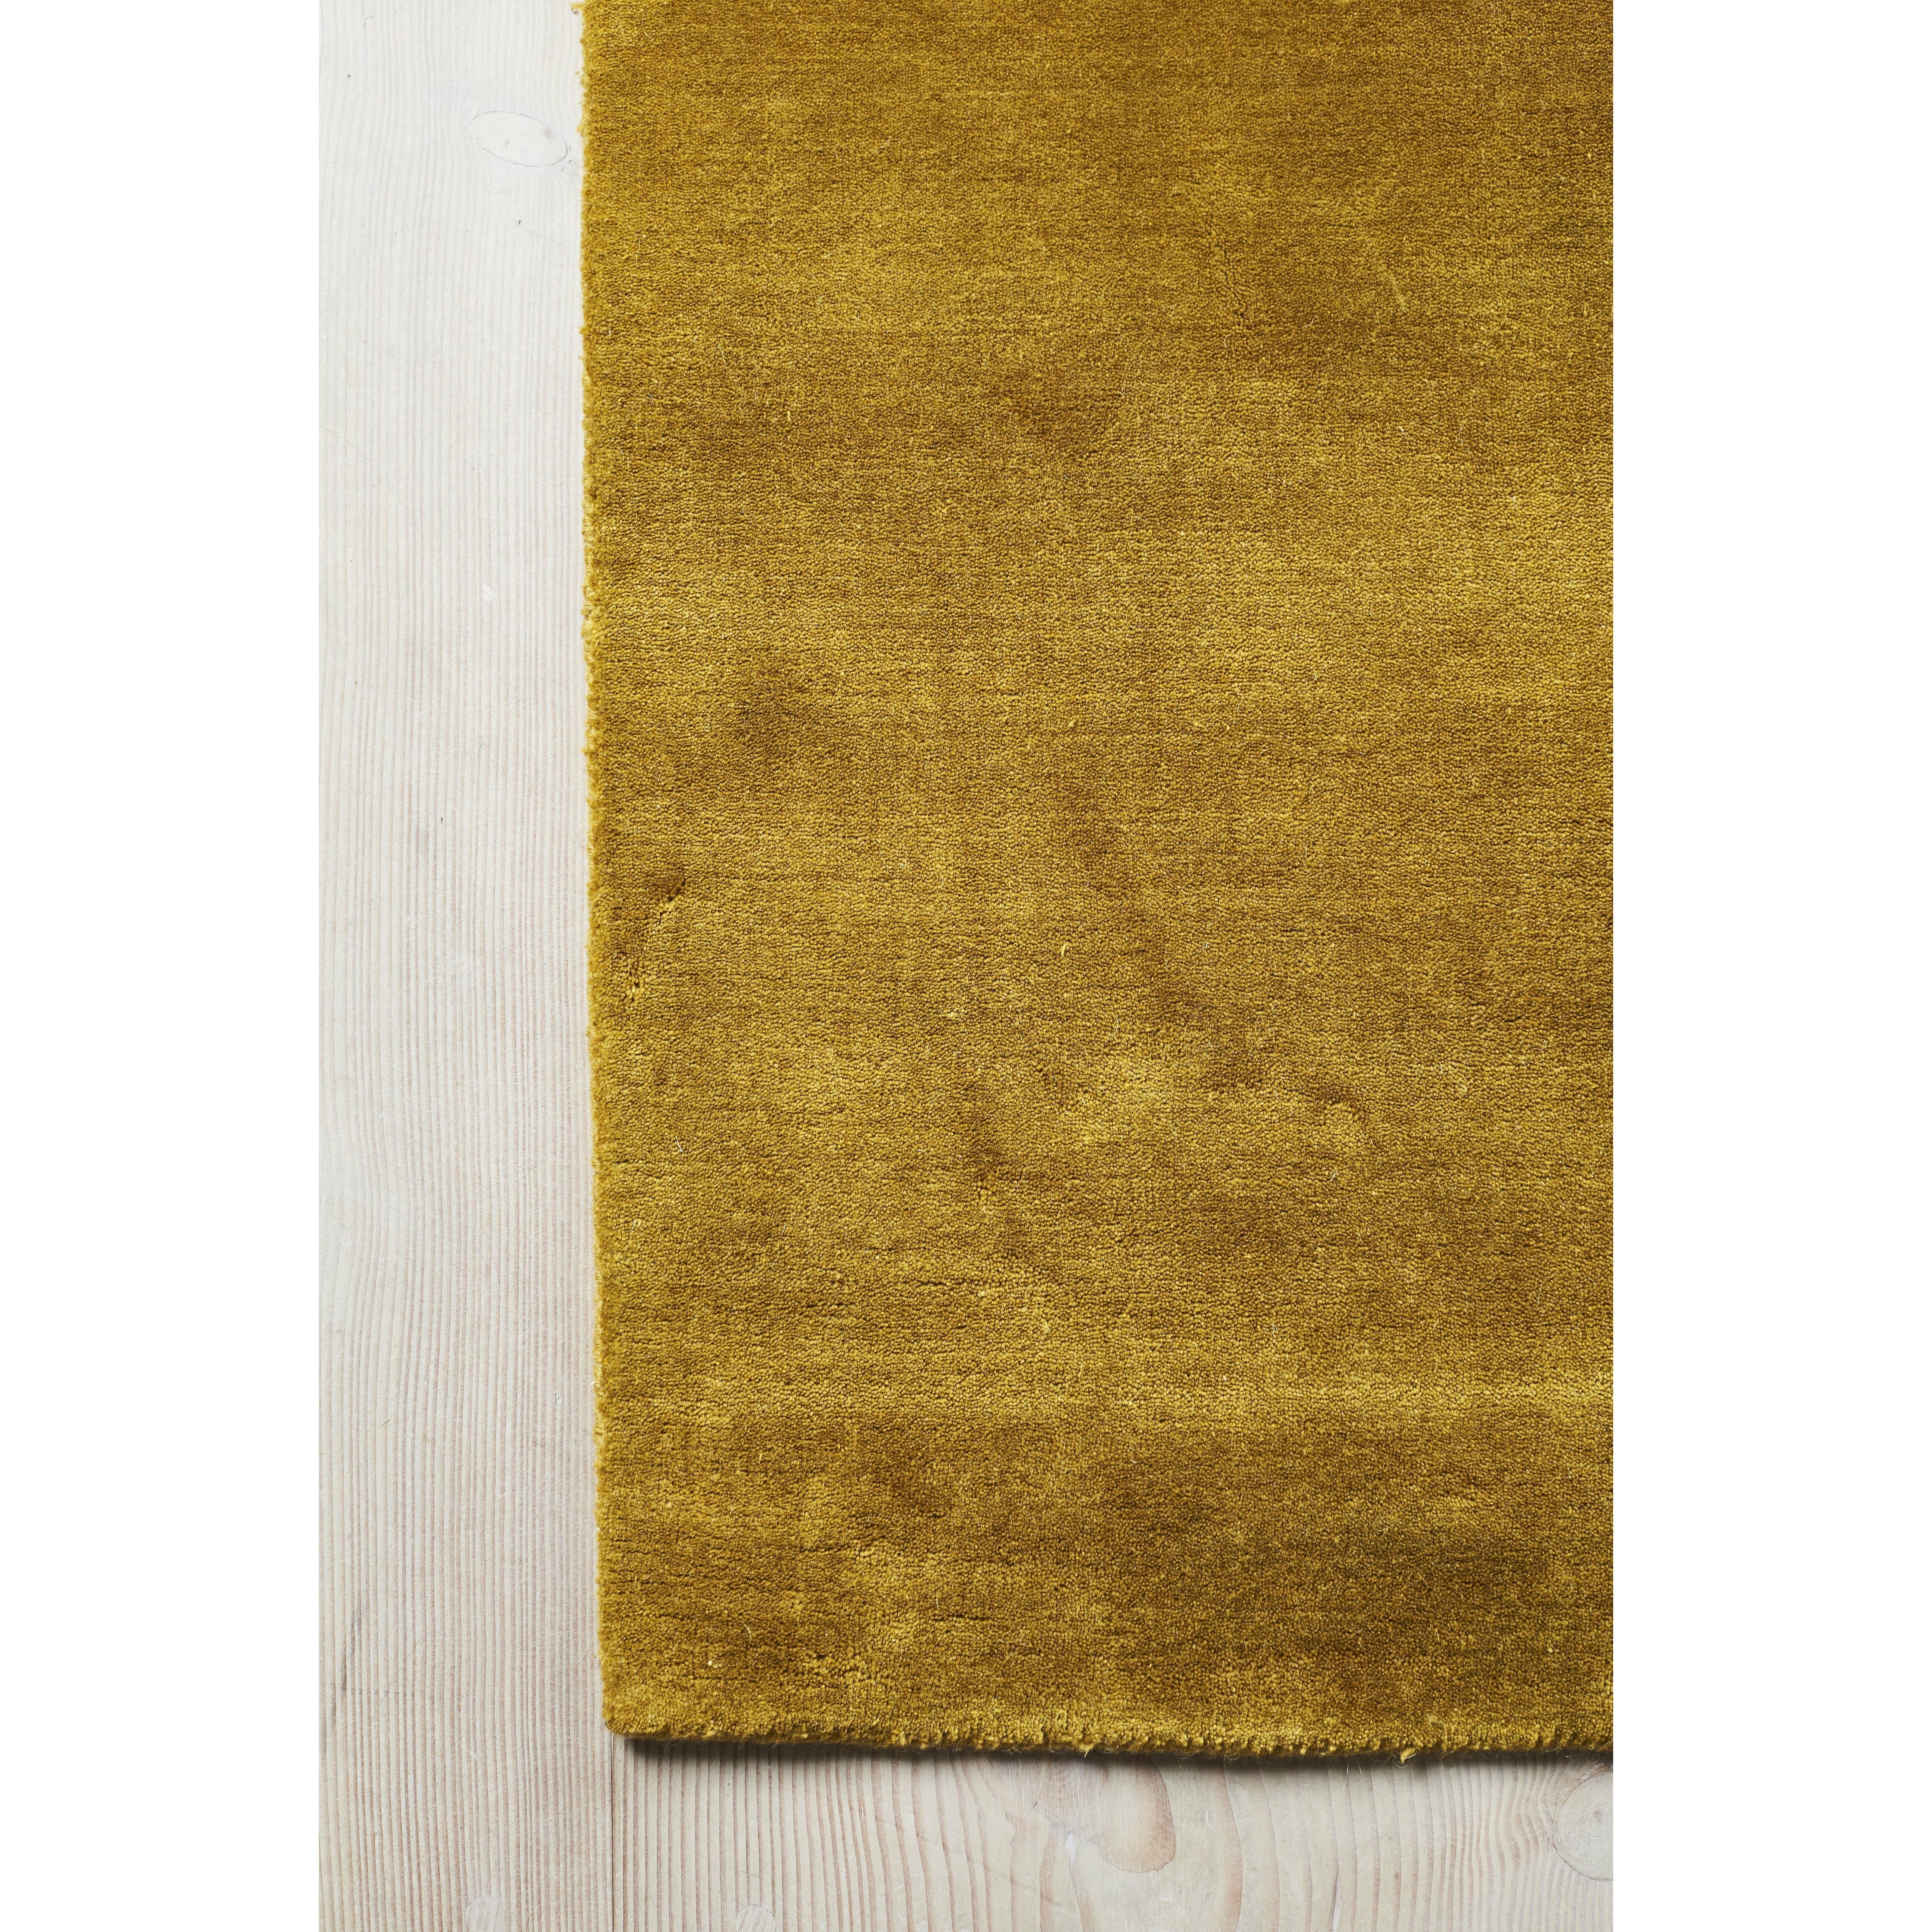 Massimo Earth Bamboo Dywan Chiński żółty, 250x300 cm